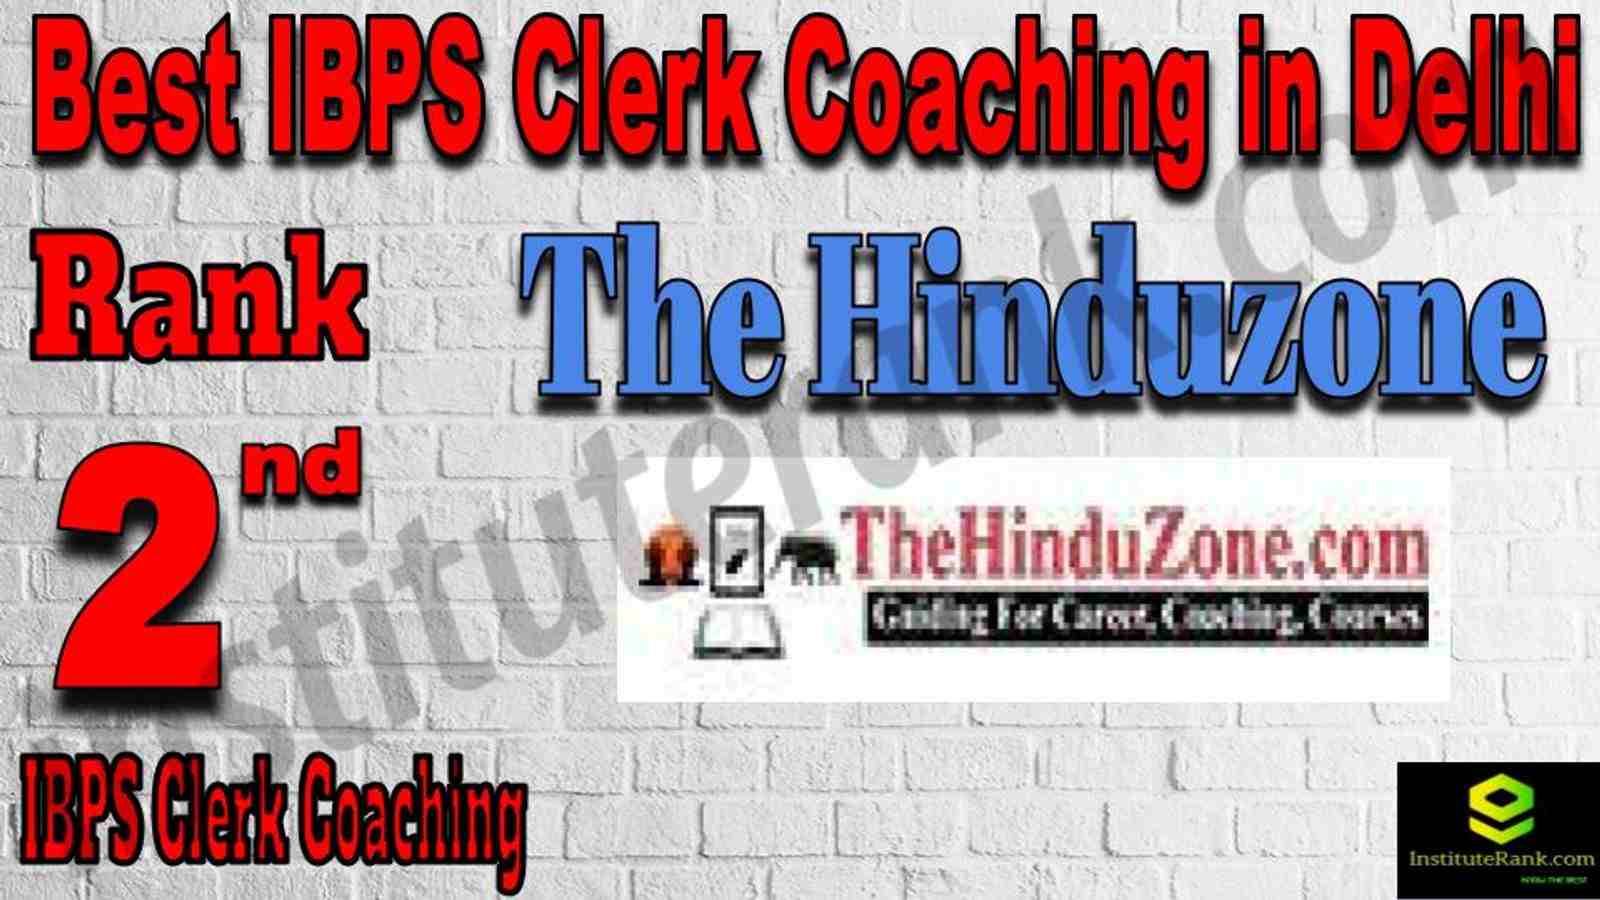 Rank 2 Best IBPS Clerk Coaching in Delhi